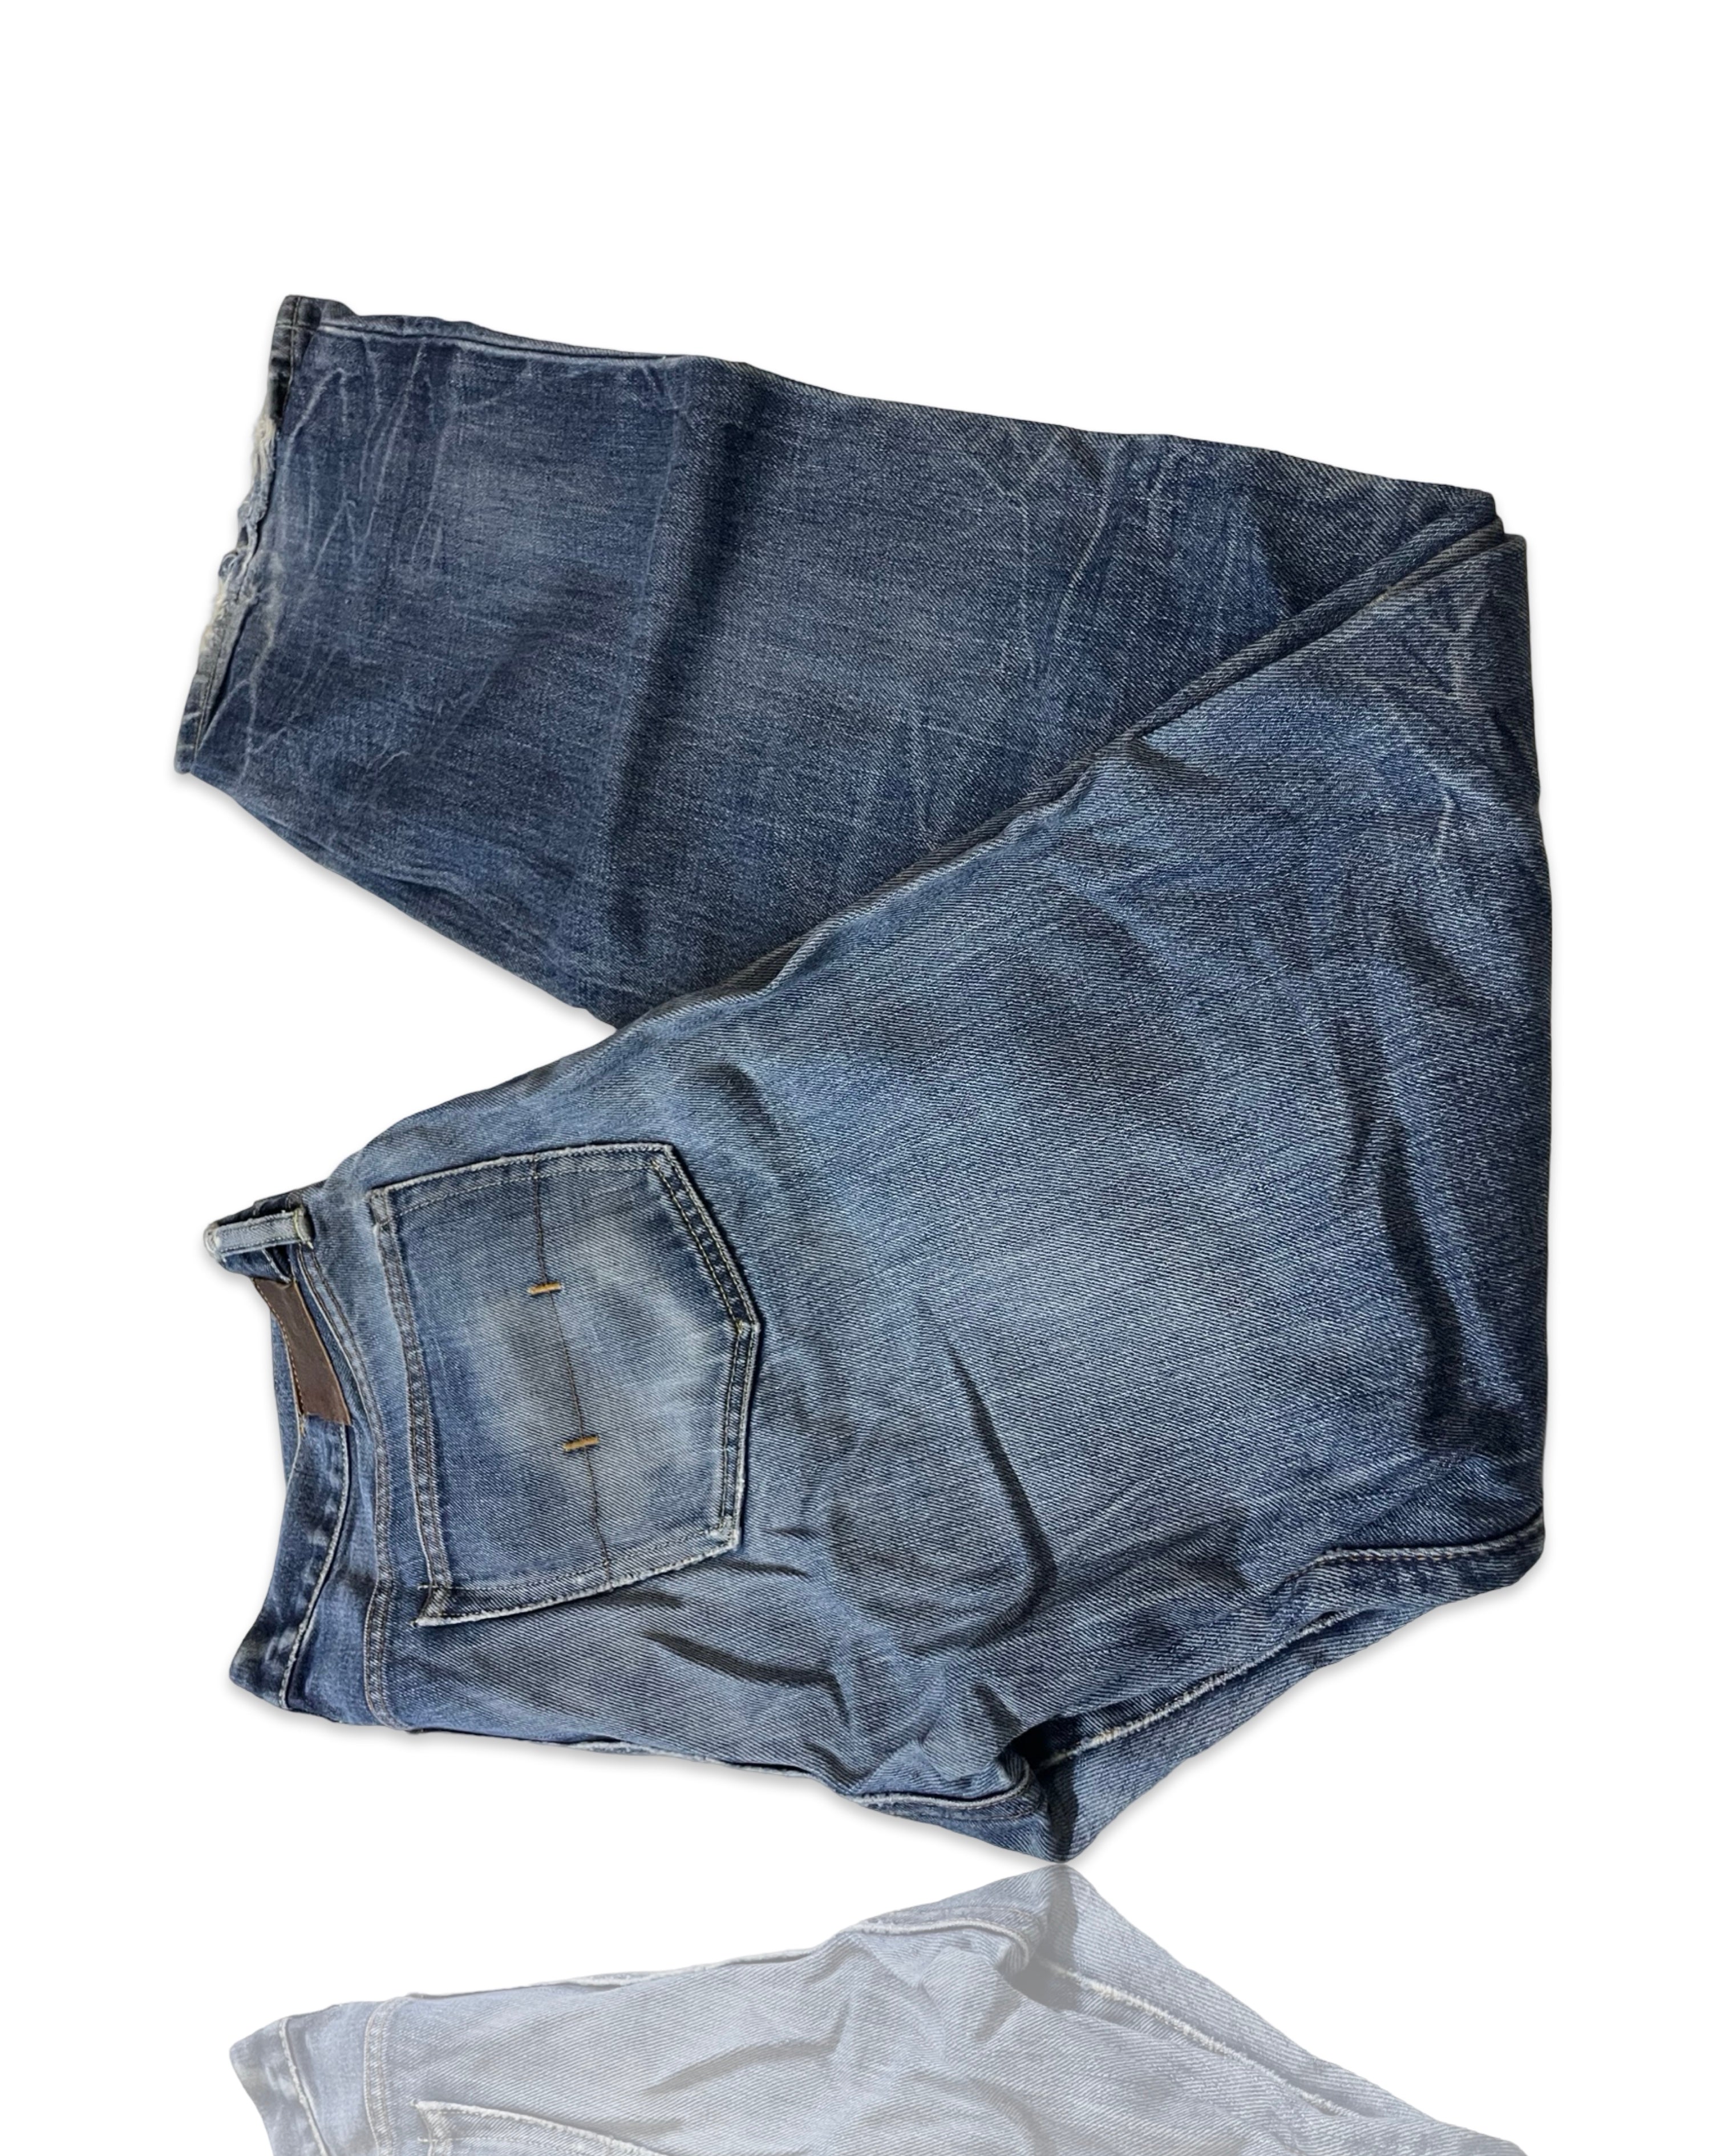 Vintage Polo Ralph Lauren Denim Jeans Men's 34X34 RN. Condition is Pre-owned.|SKU 4264